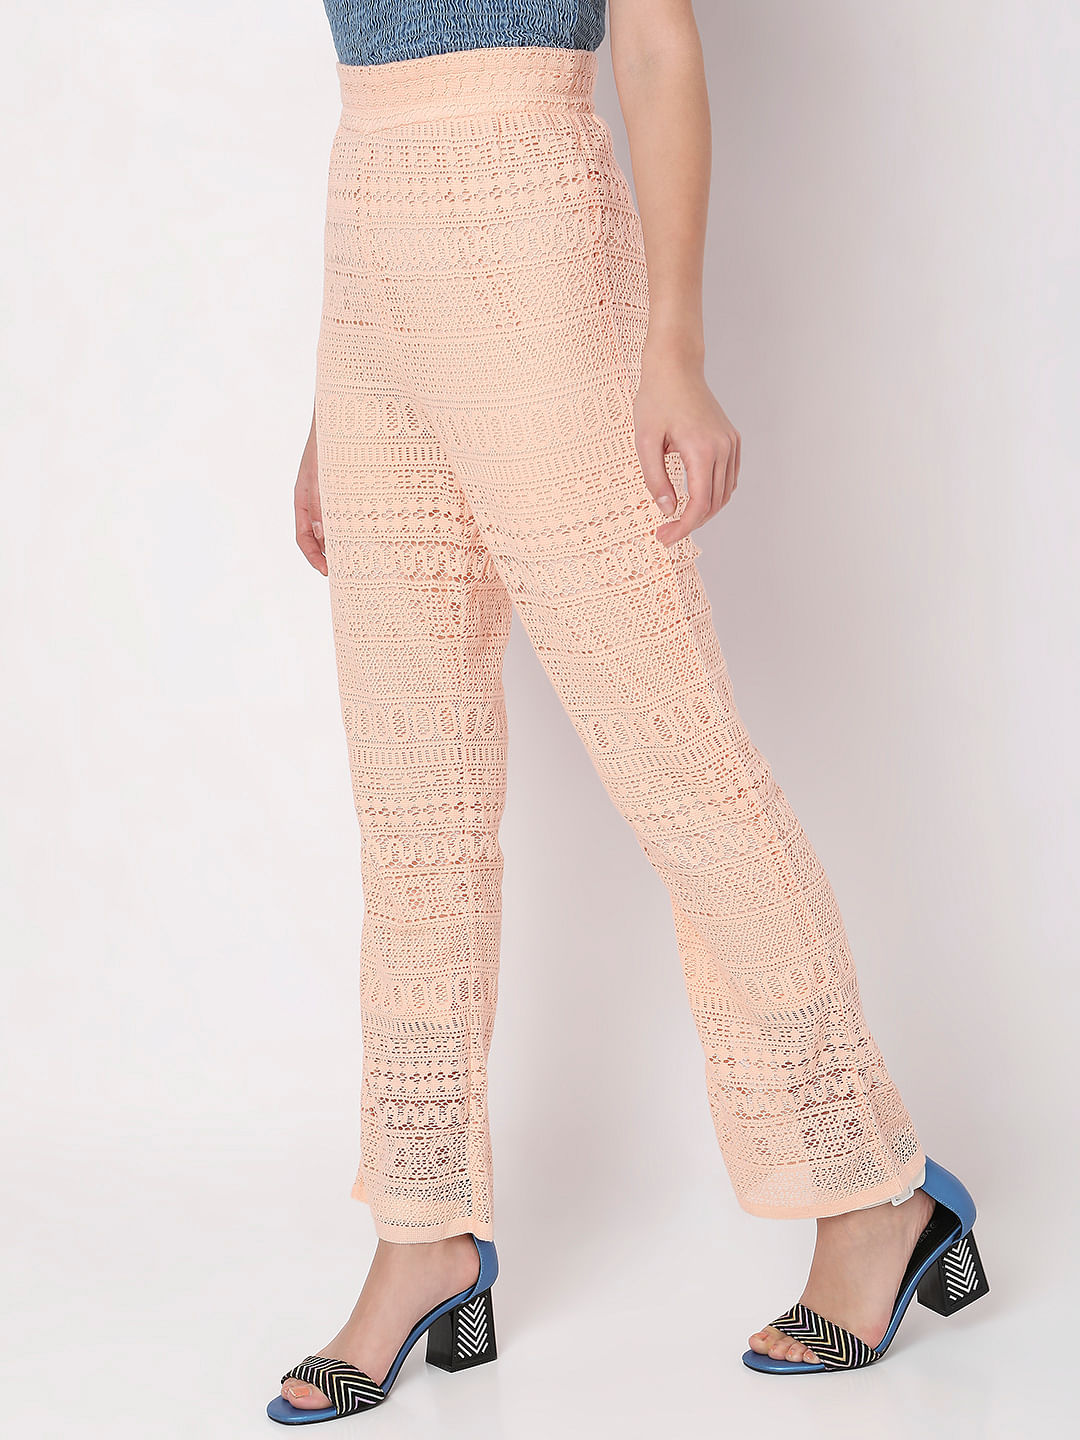 Mermaid Lace Pants PDF Crochet Pattern - Etsy